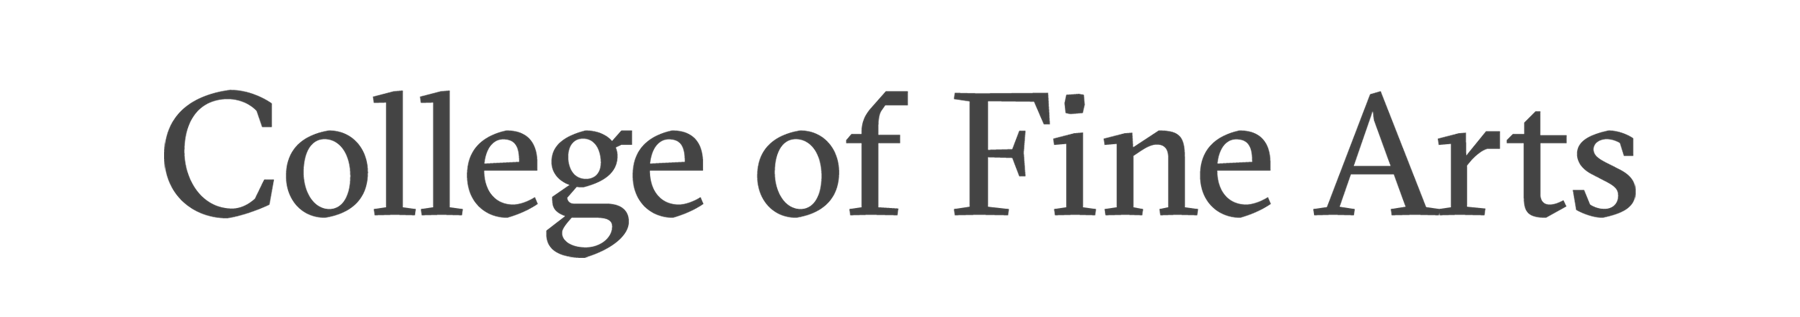 College of Fine Arts Logo